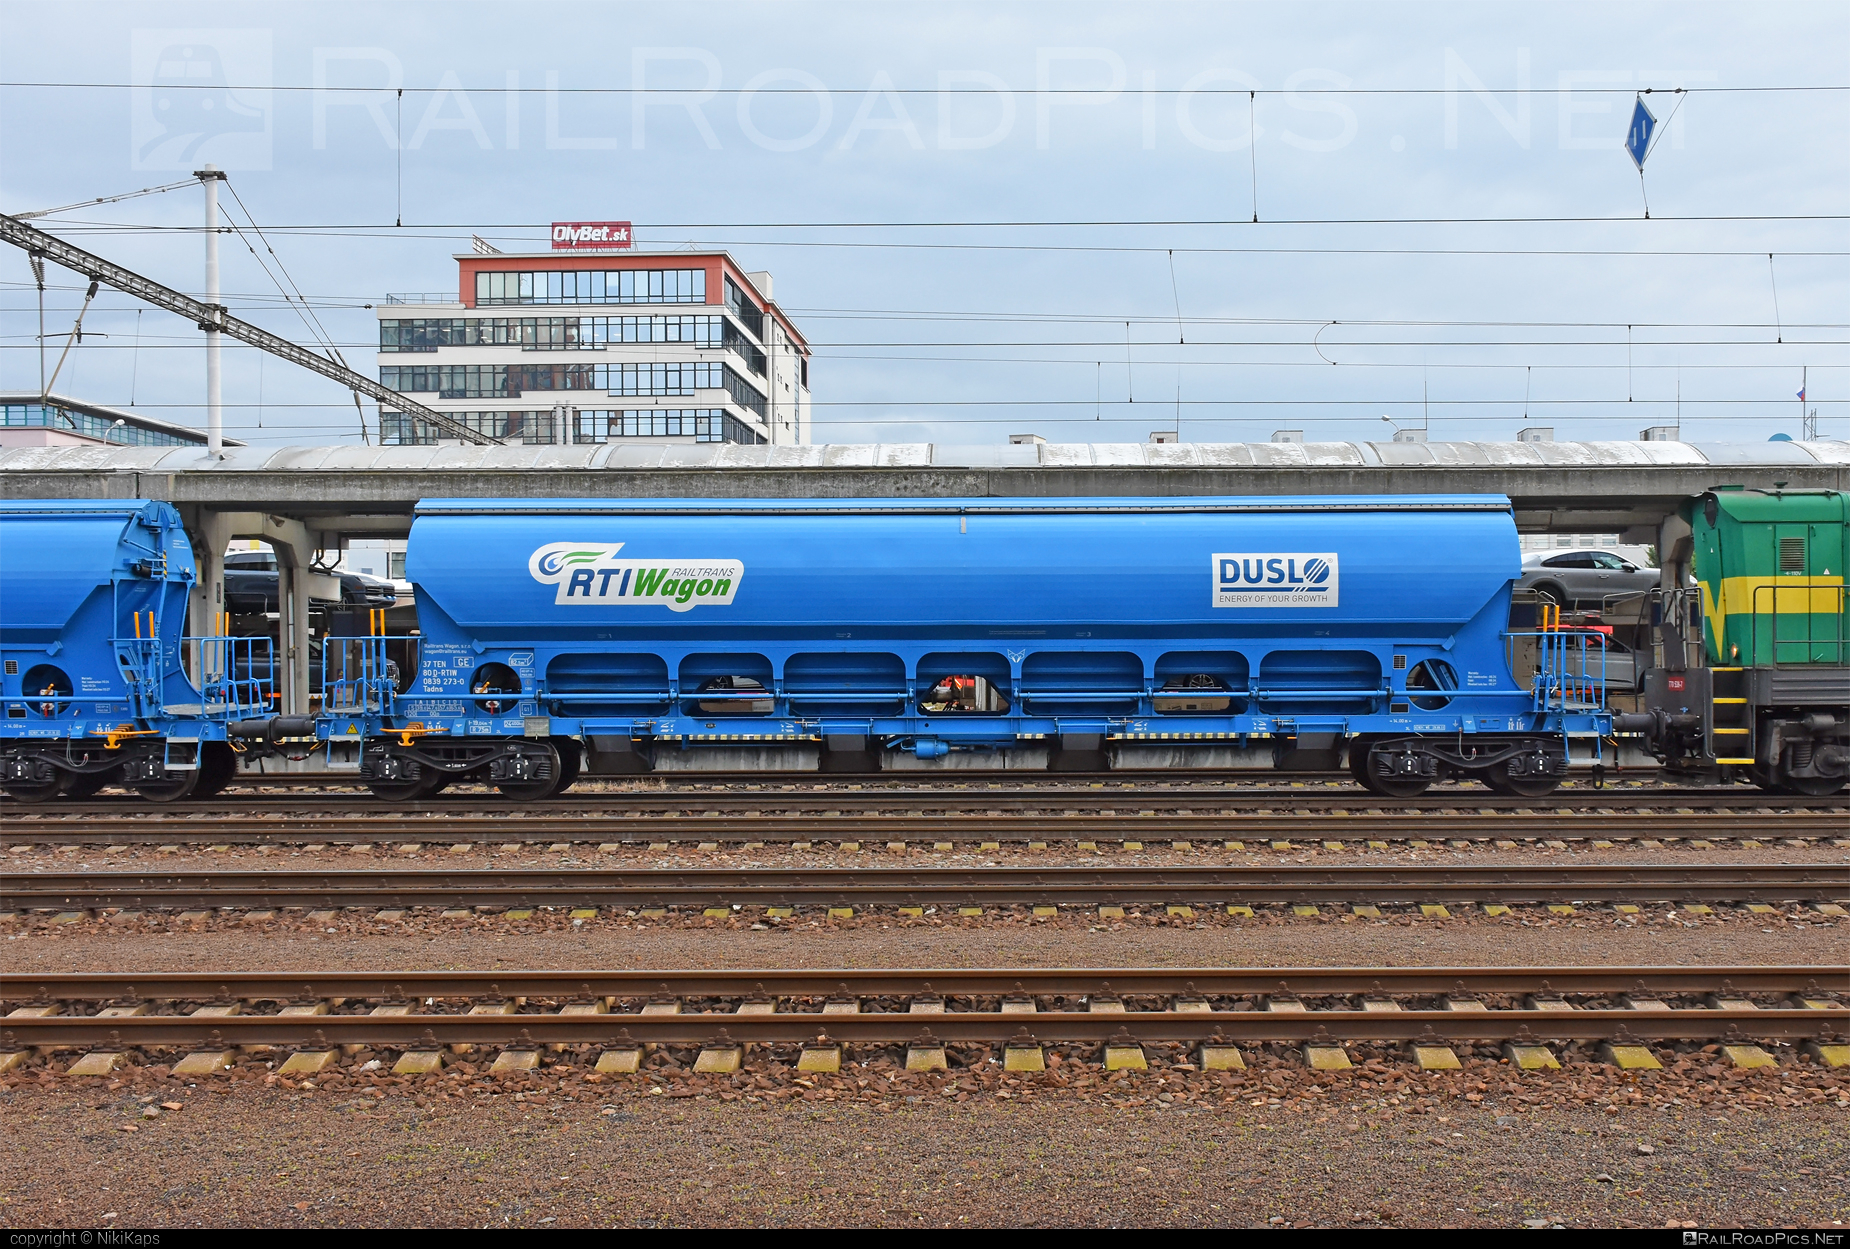 Class T - Tadns - 0839 273-0 operated by DUSLO a.s. #duslo #hopperwagon #railtransWagon #railtransWagonSro #rtiw #rtiwagon #tadns